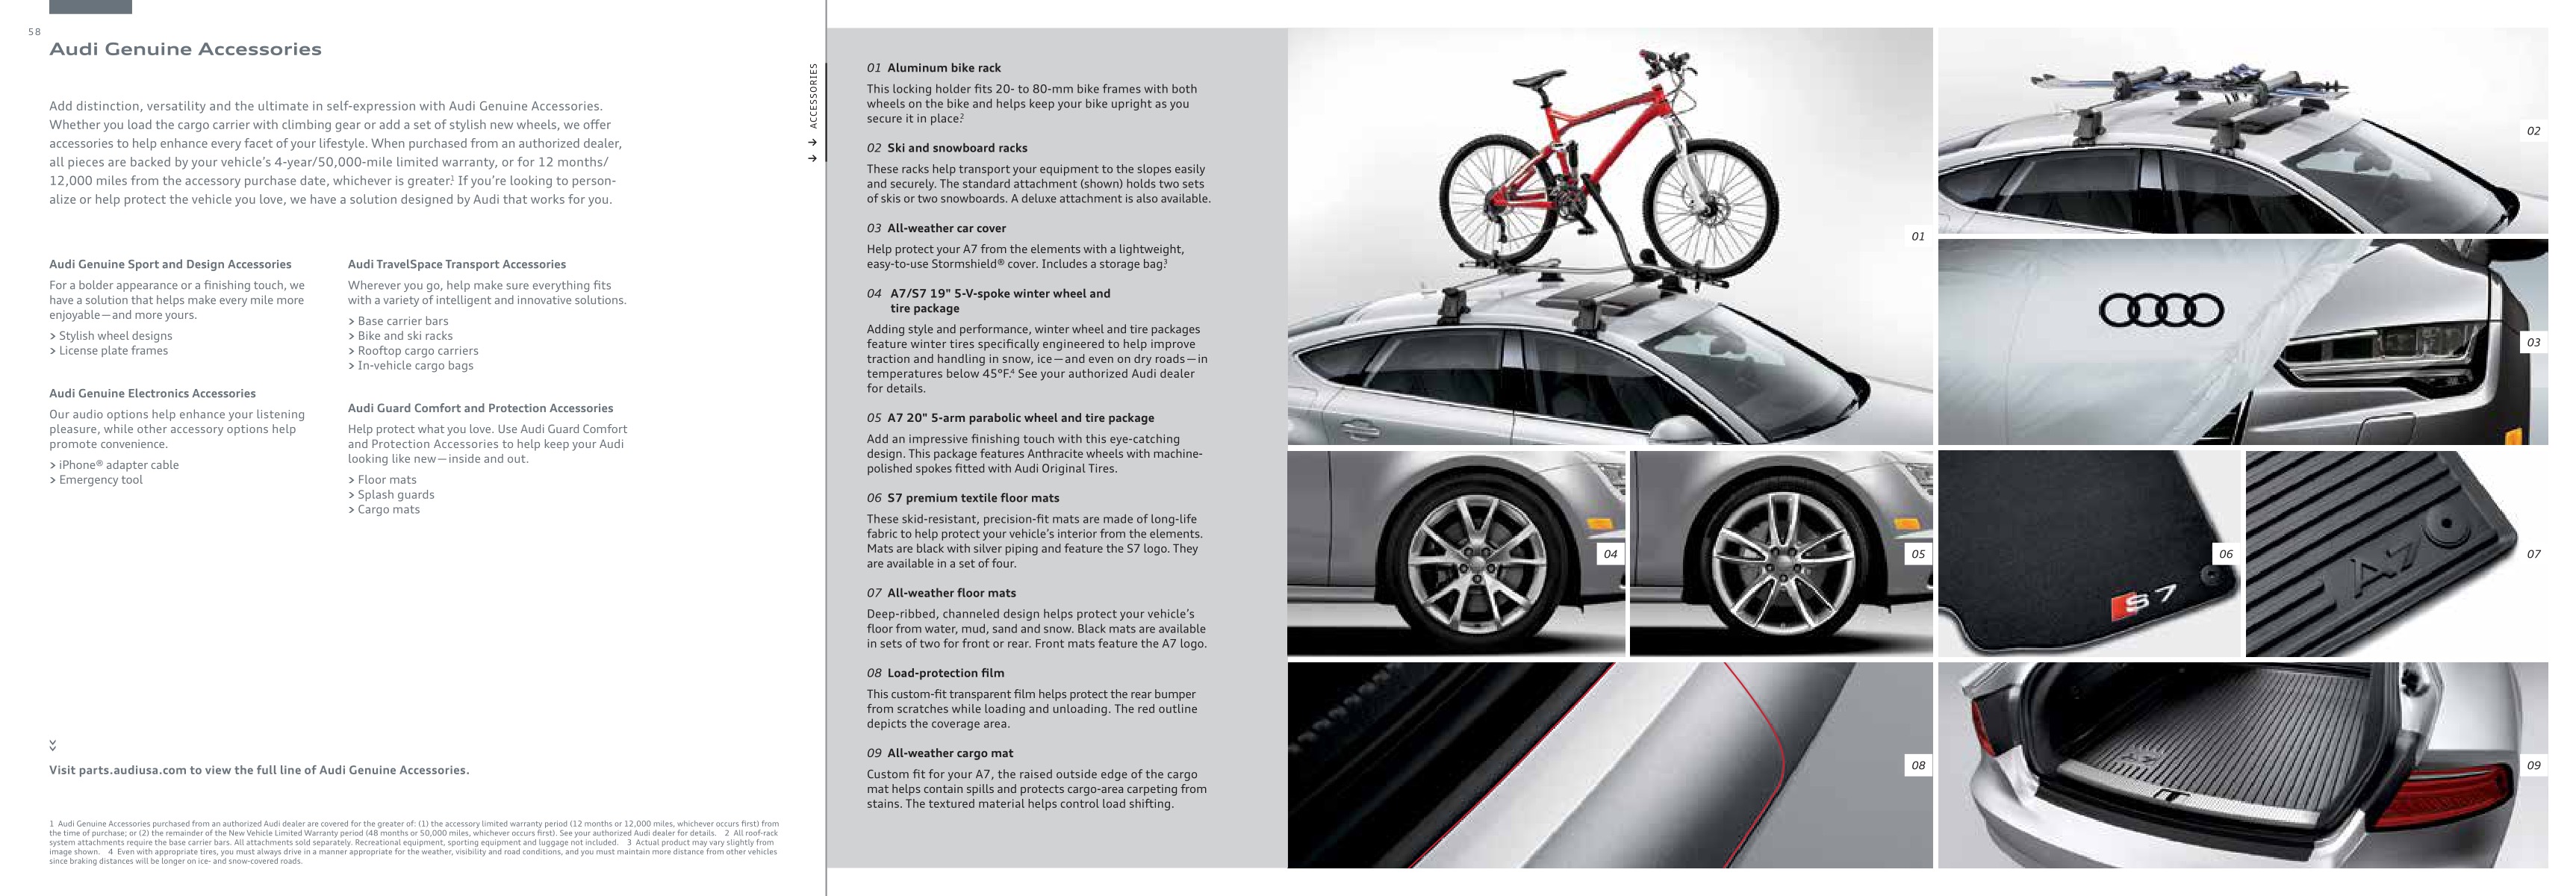 2016 Audi A7 Brochure Page 20